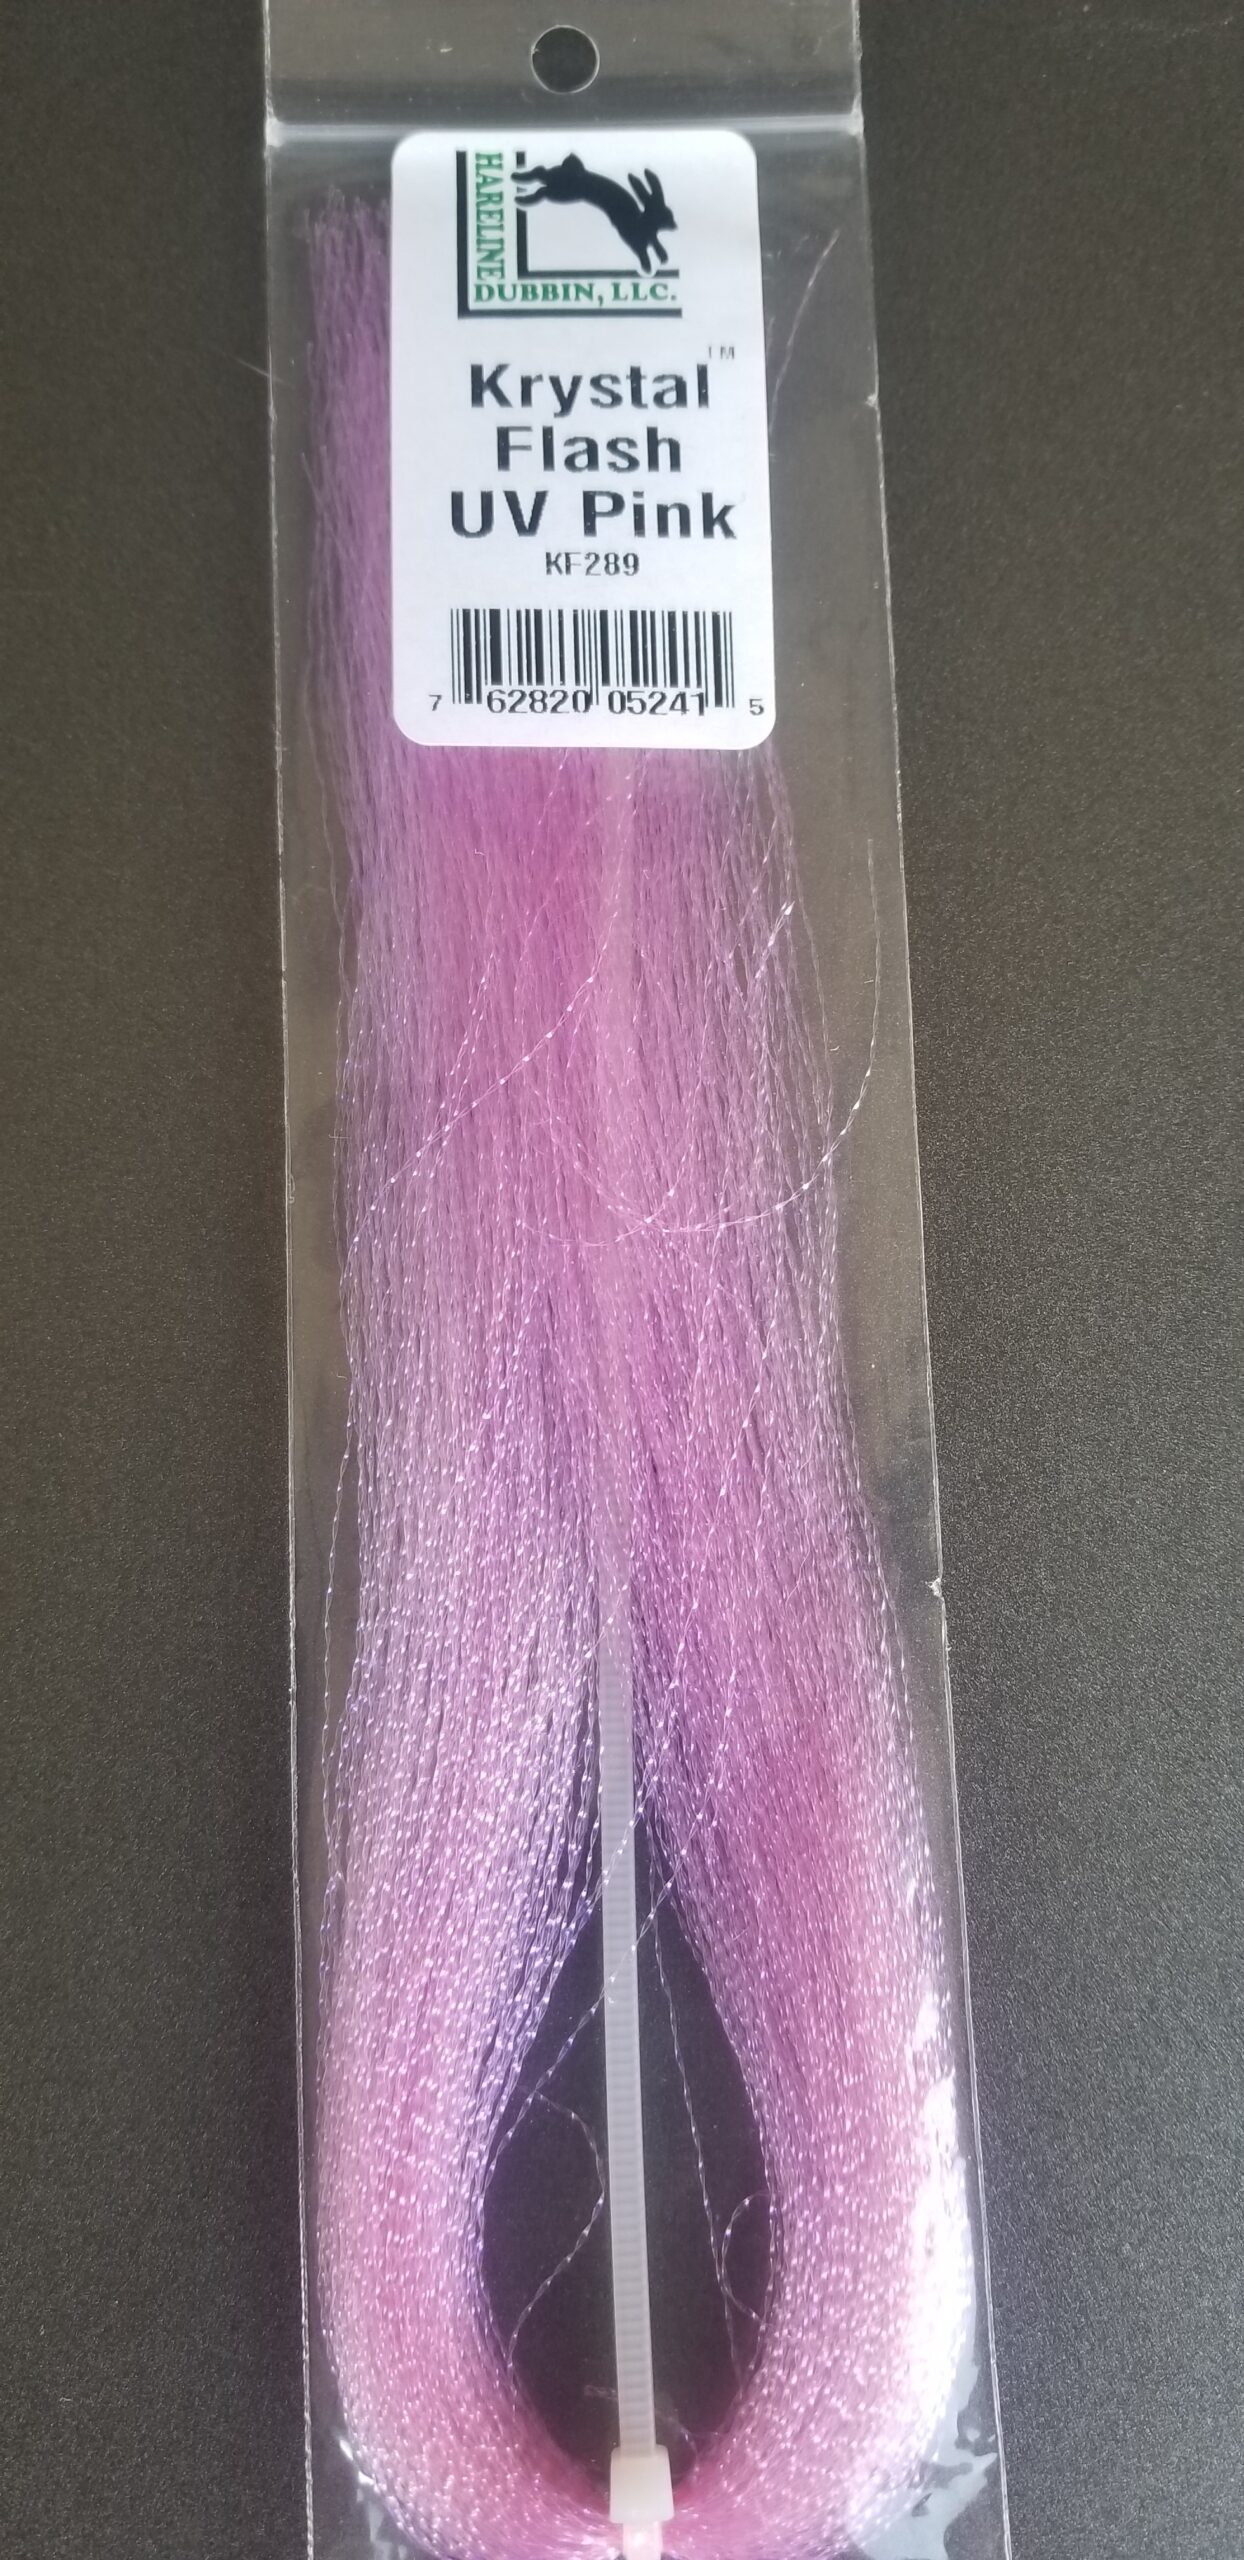 Dinger Jigs Krystal Flash UV Pink KF289 e1559334001810 scaled - Krystal Flash & Helix Flash